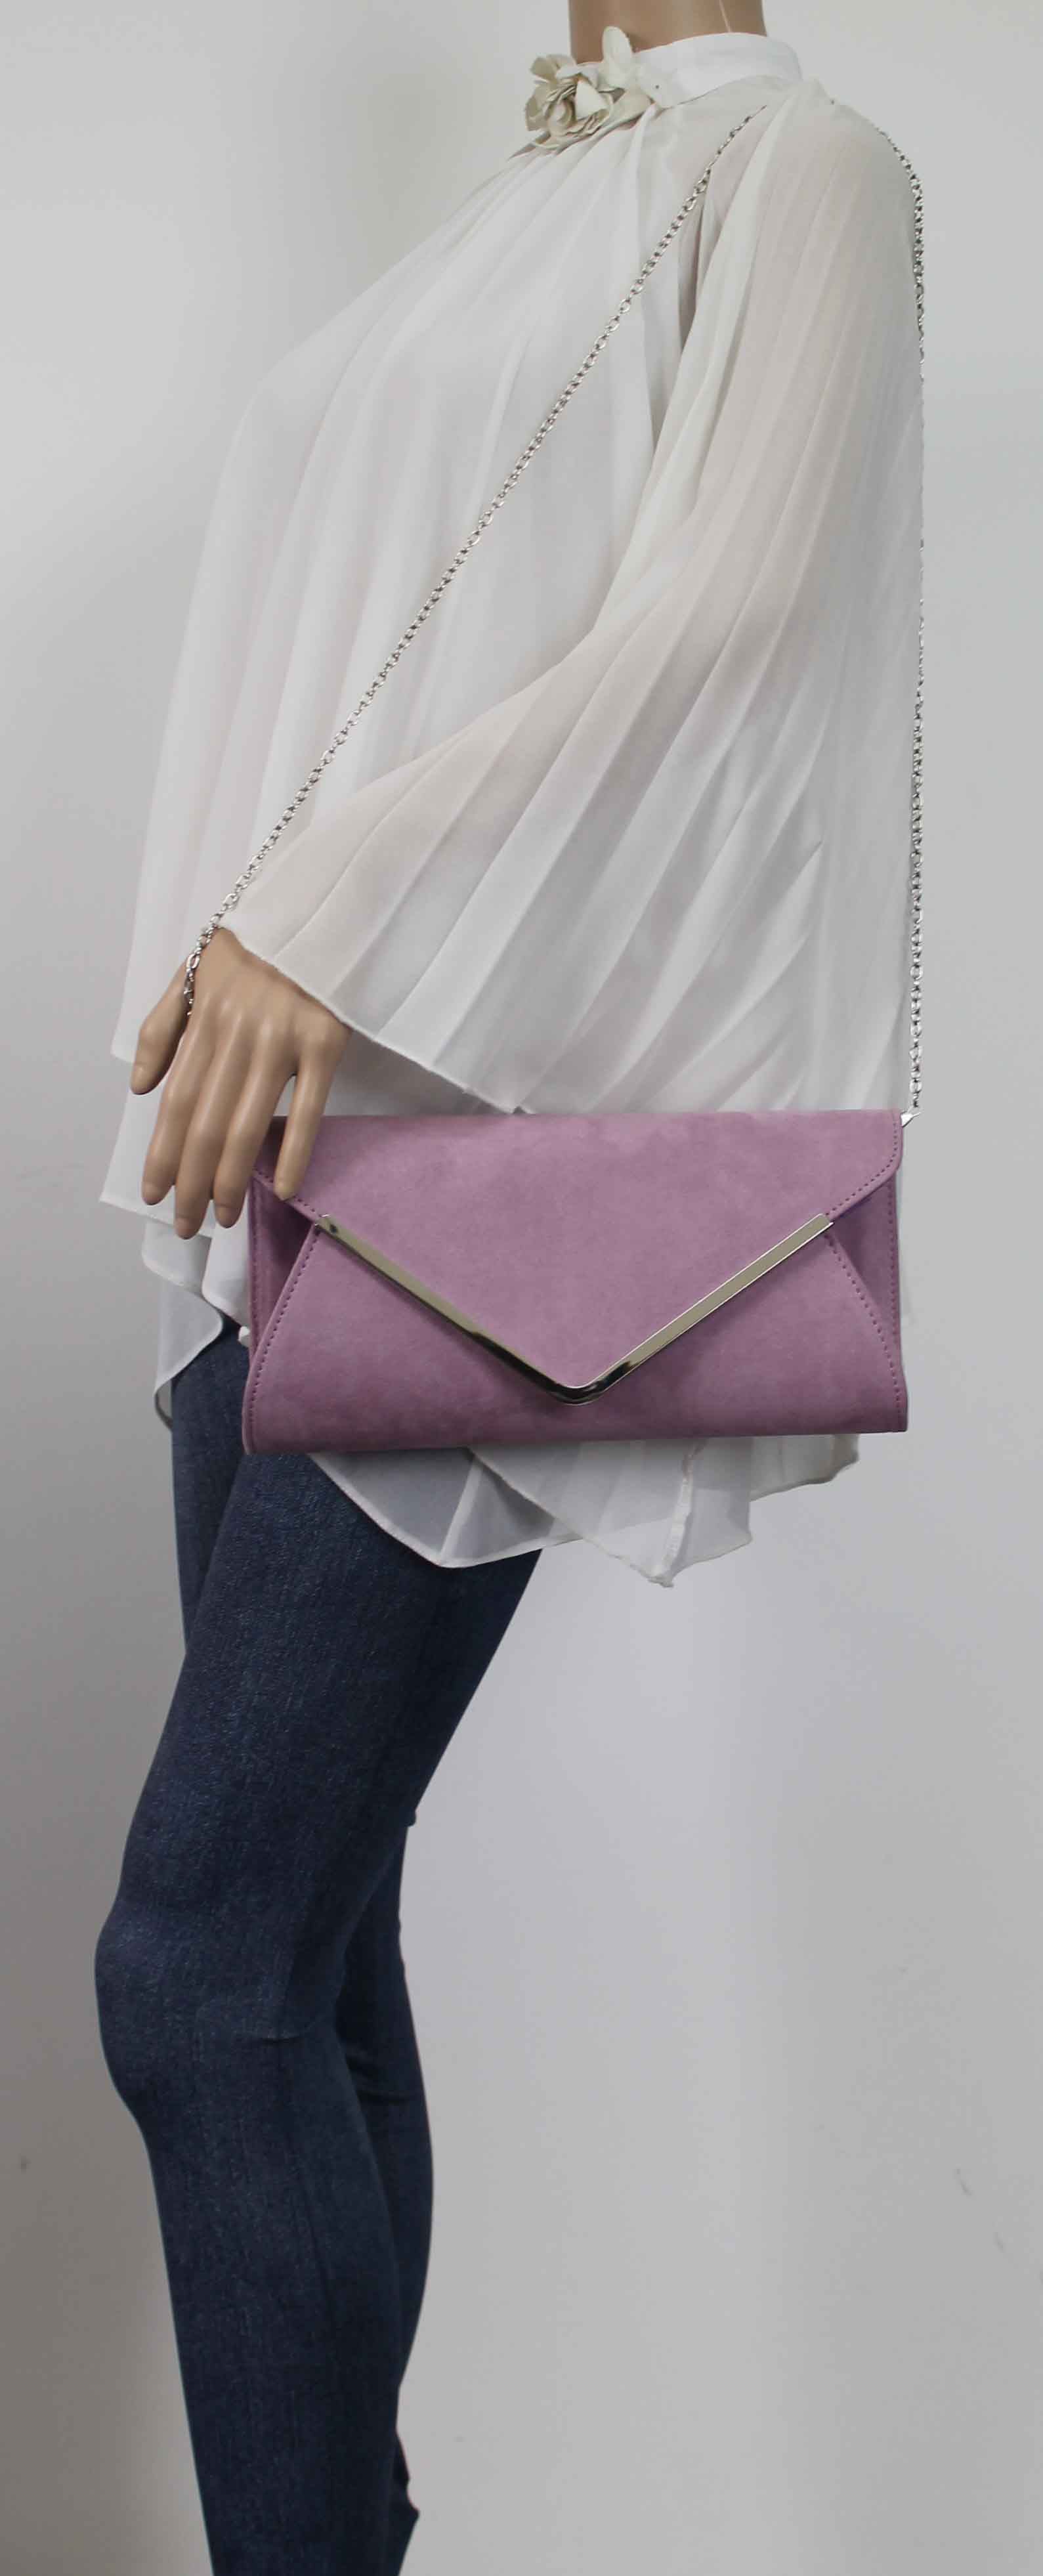 SWANKYSWANS Karlie Suede Clutch Bag Lilac Cute Cheap Clutch Bag For Weddings School and Work